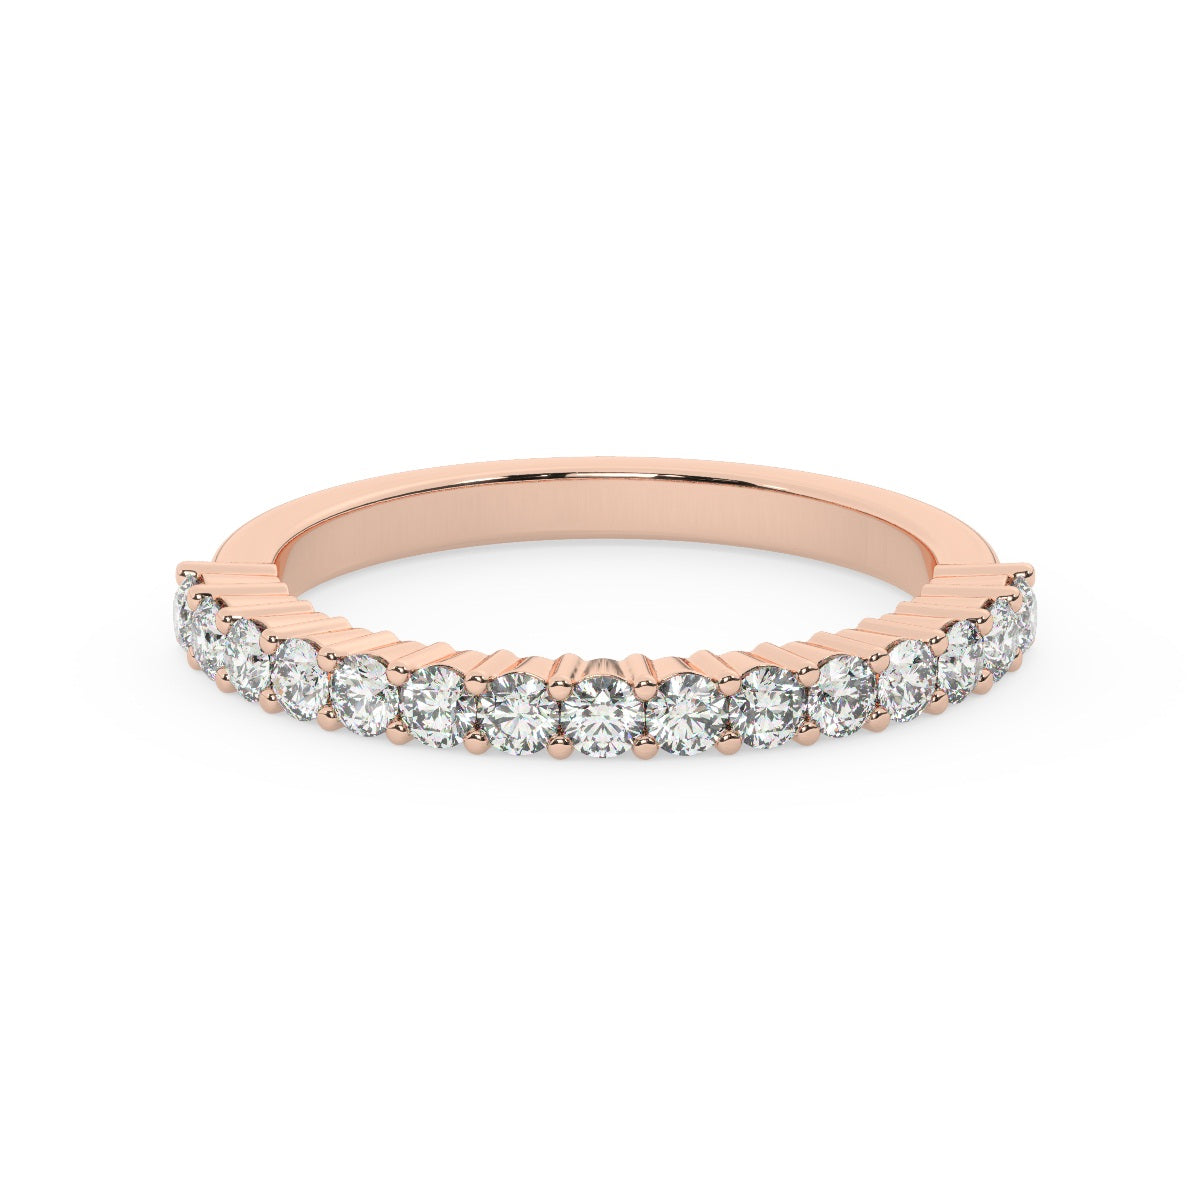 18K Gold Diamond Round Cut Wedding Ring .68c